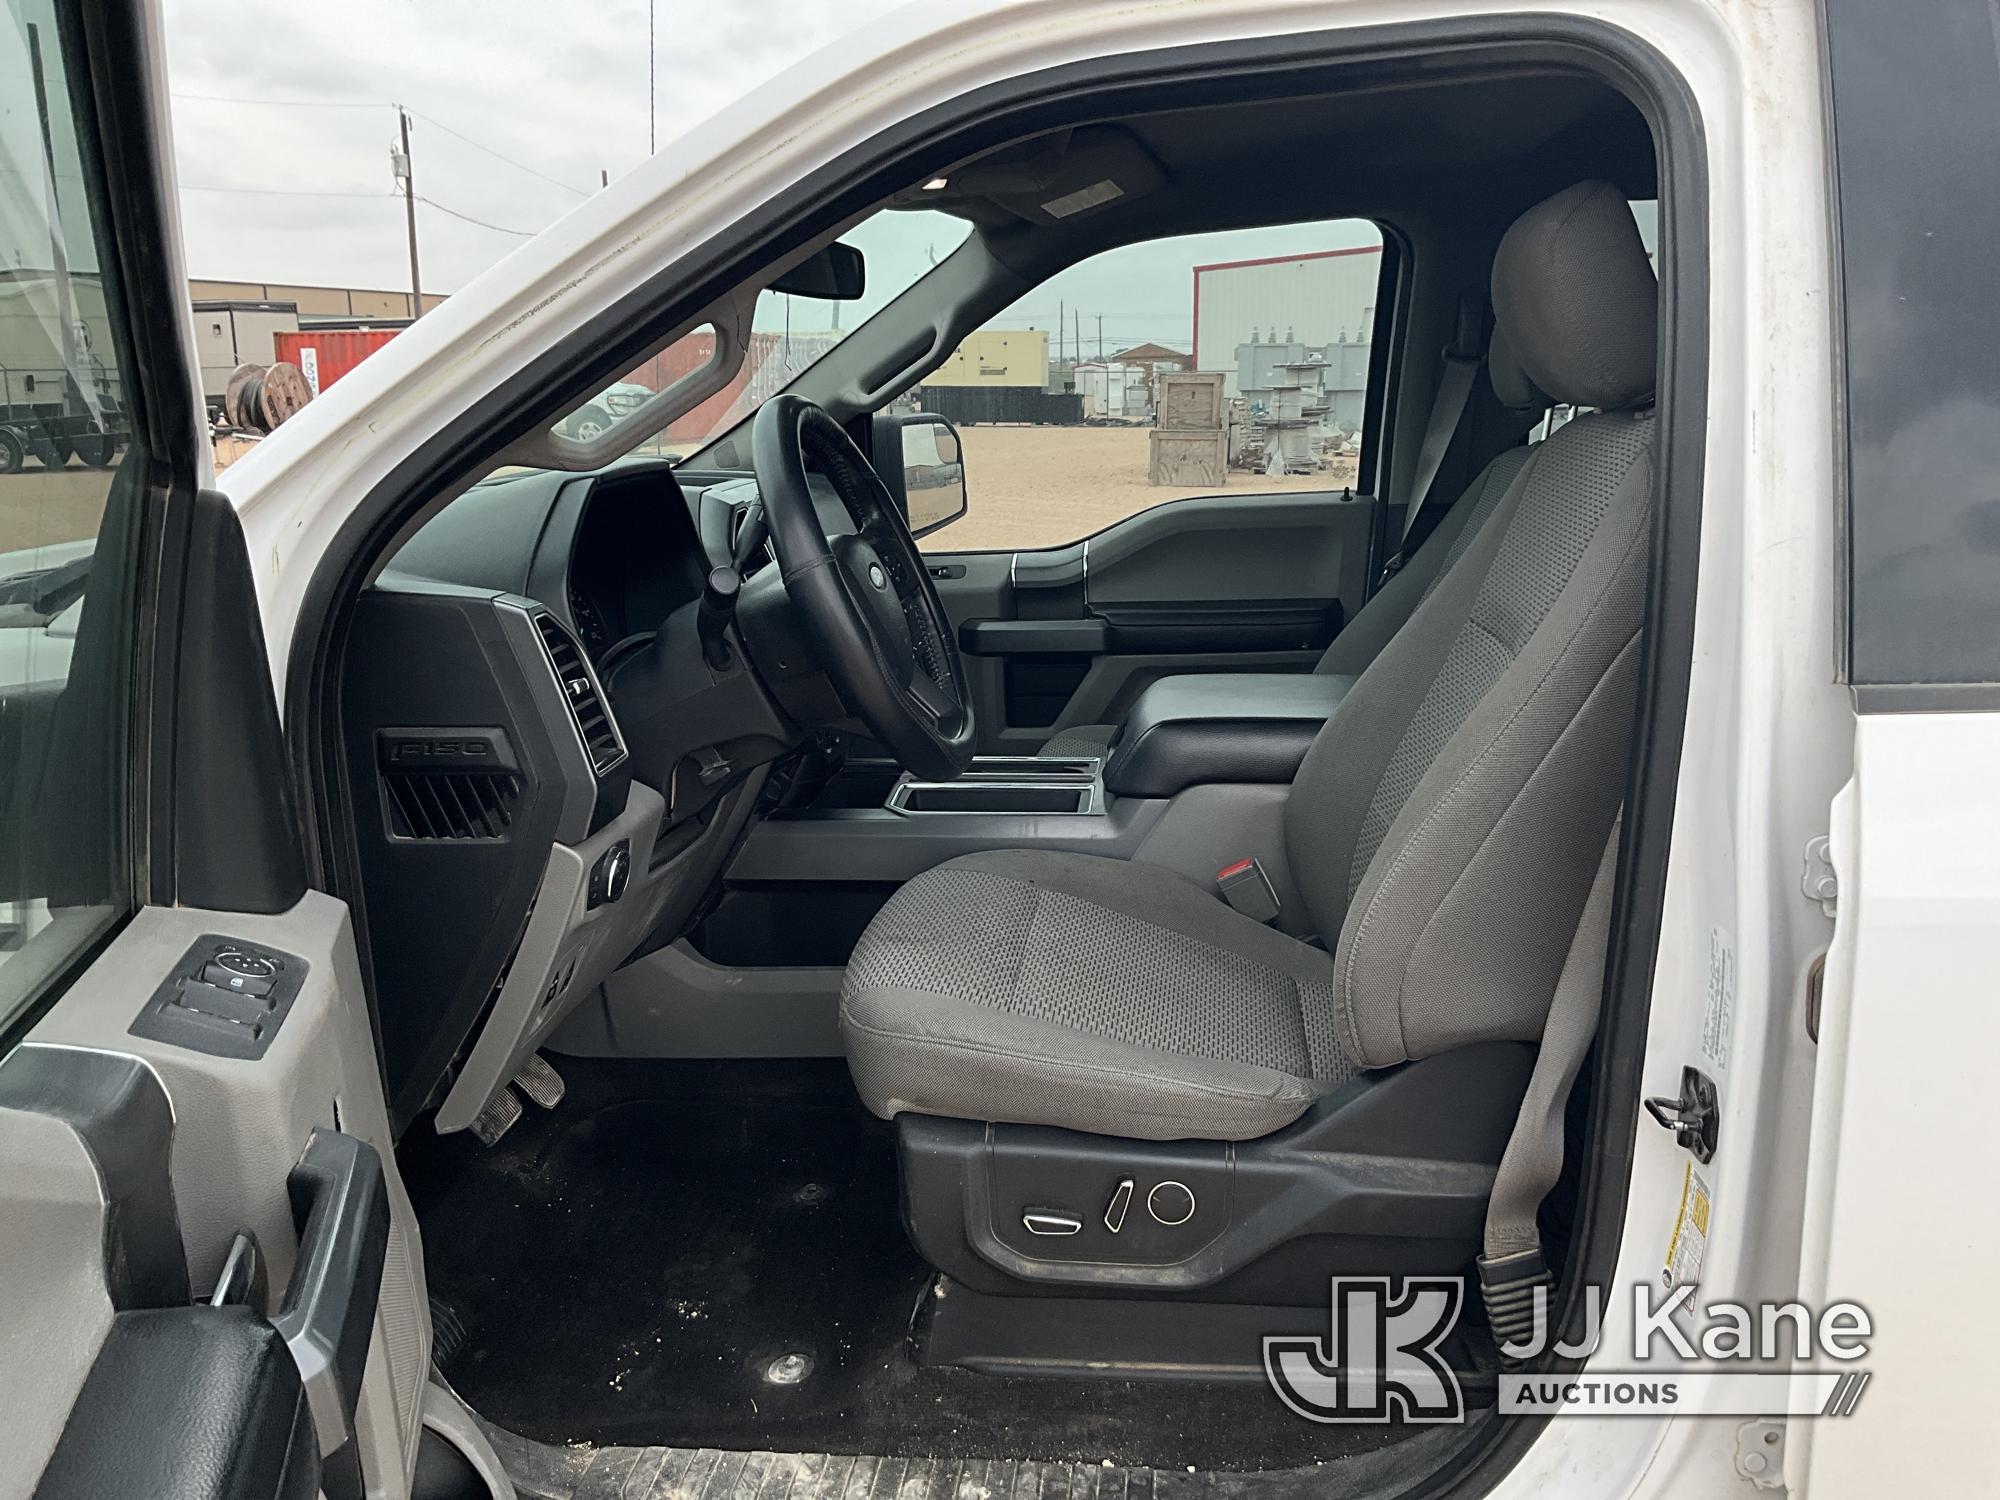 (Midland, TX) 2018 Ford King Ranch F150 4x4 Crew-Cab Pickup Truck Runs & Moves) (Hail Damage, Engine